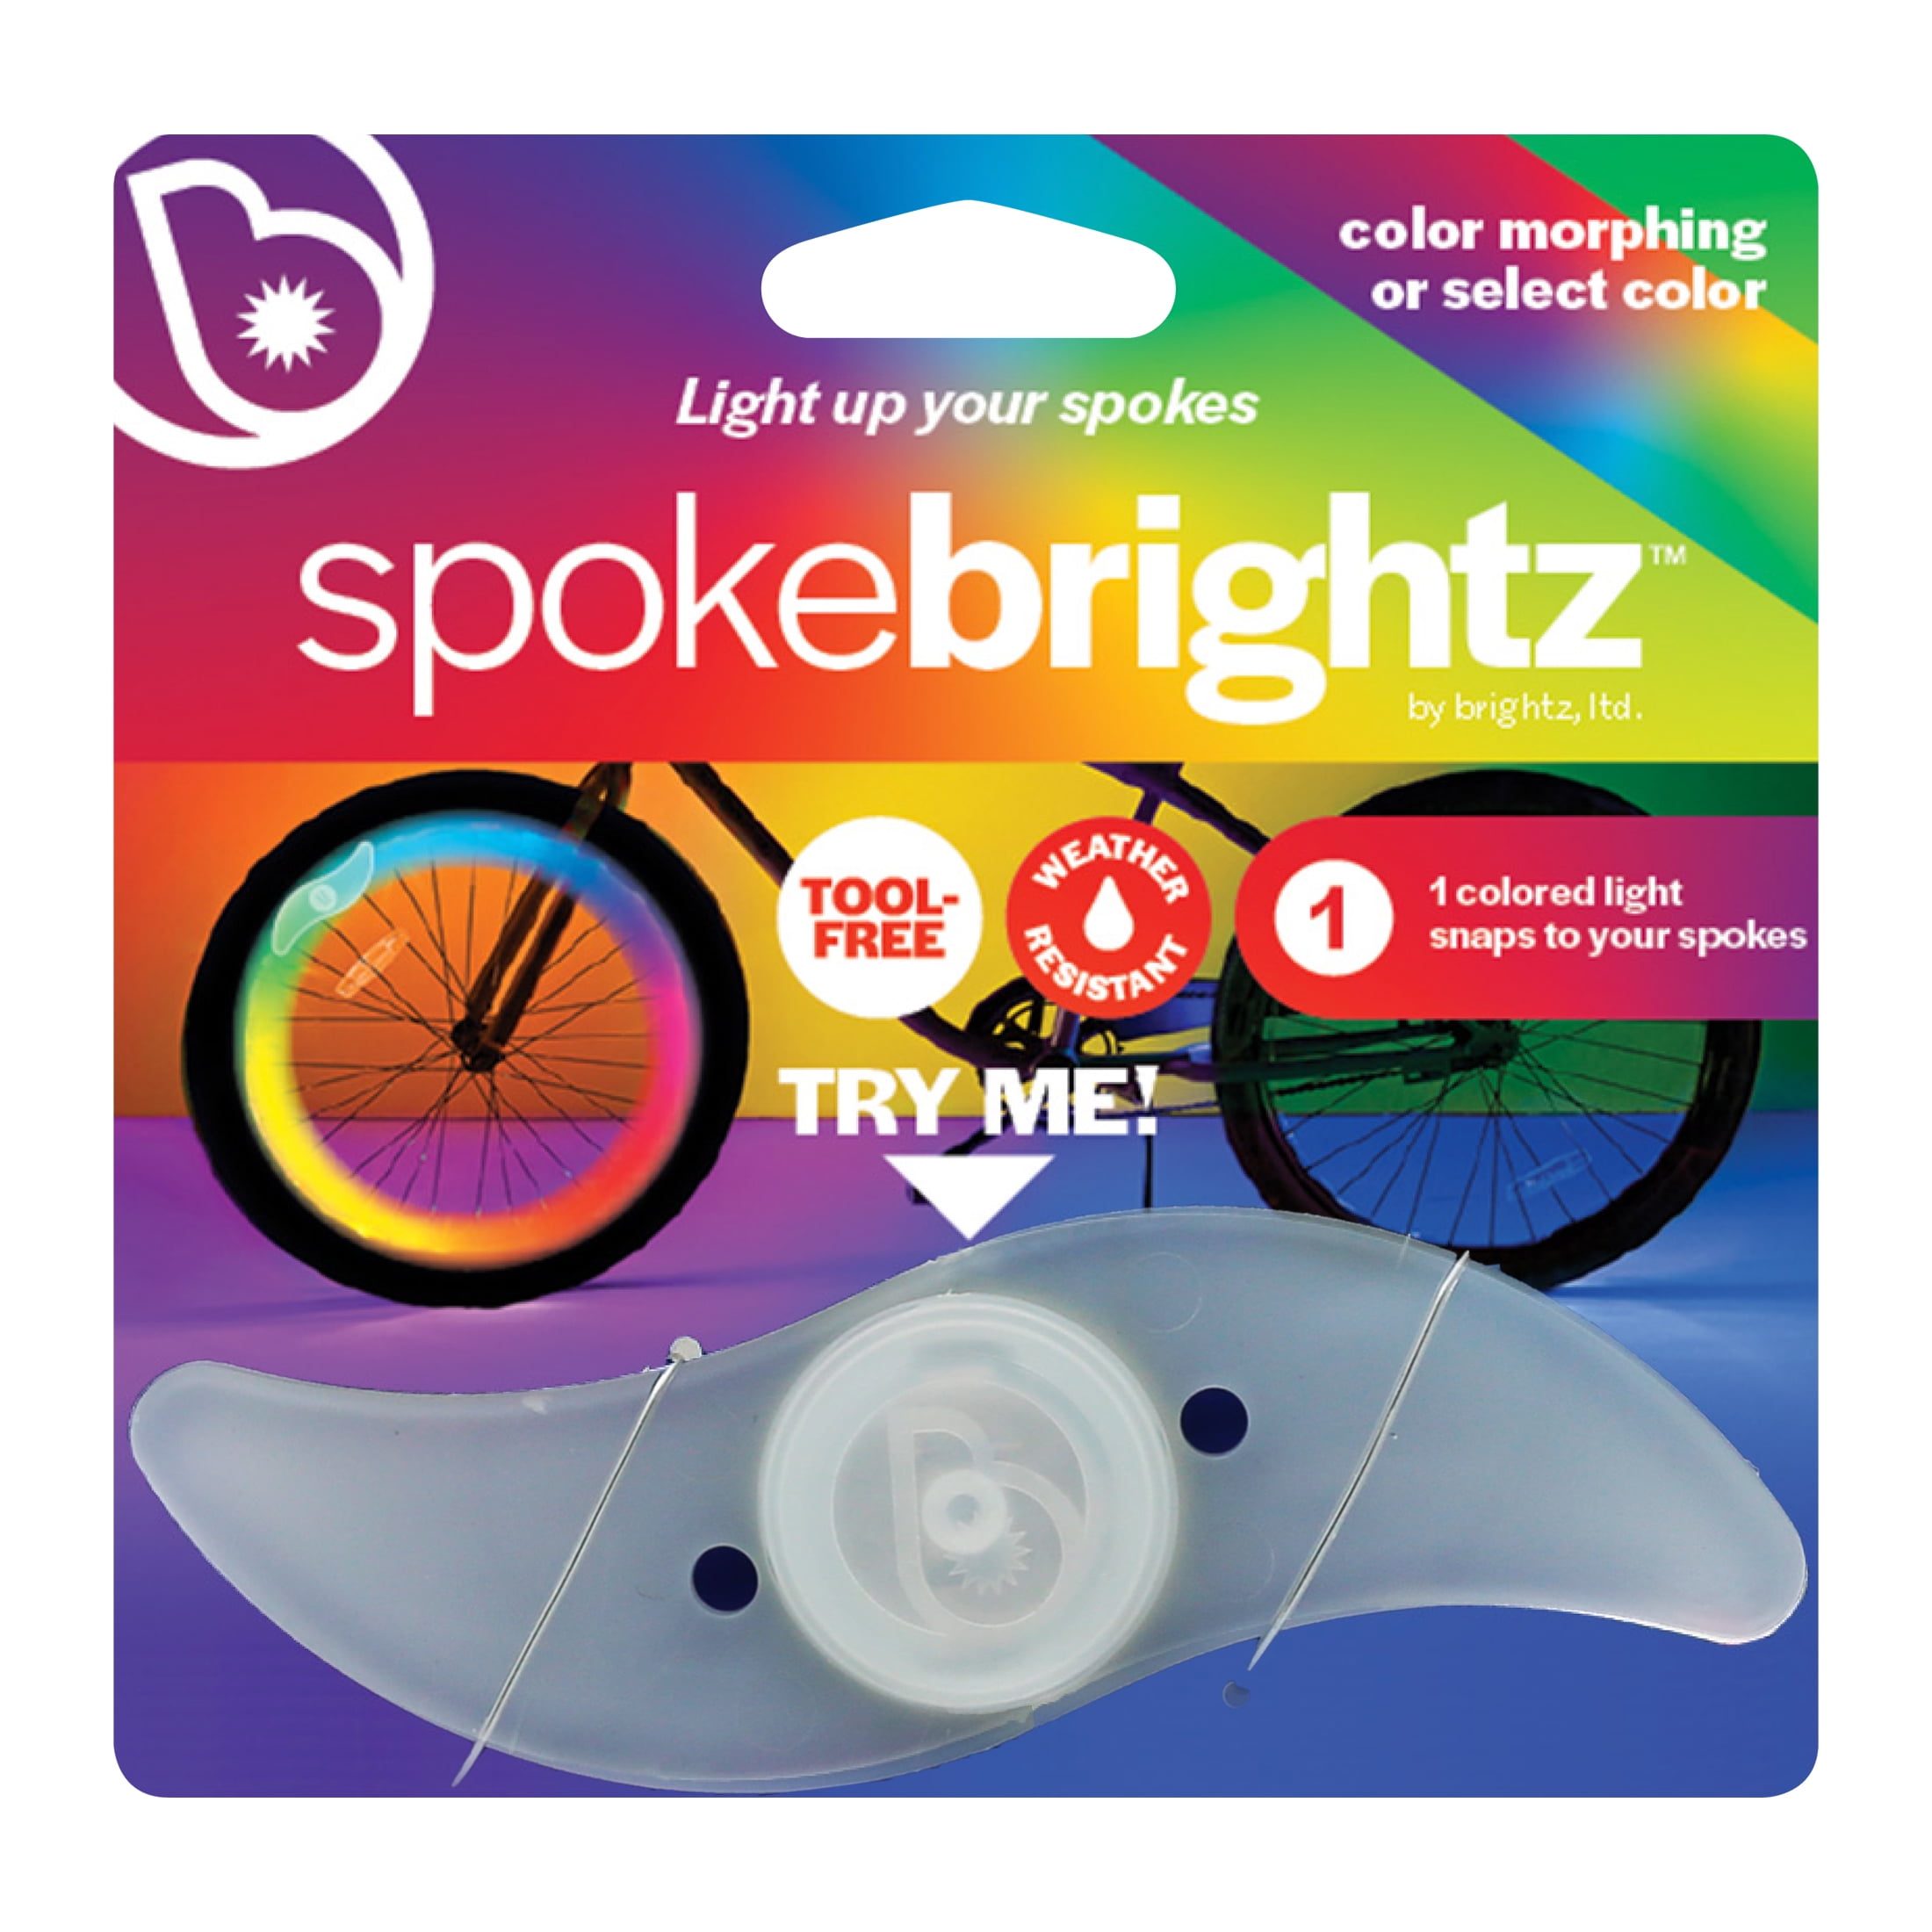 Spoke Brightz Color Morphing LED Bicycle Spoke Light, for 1 Wheel